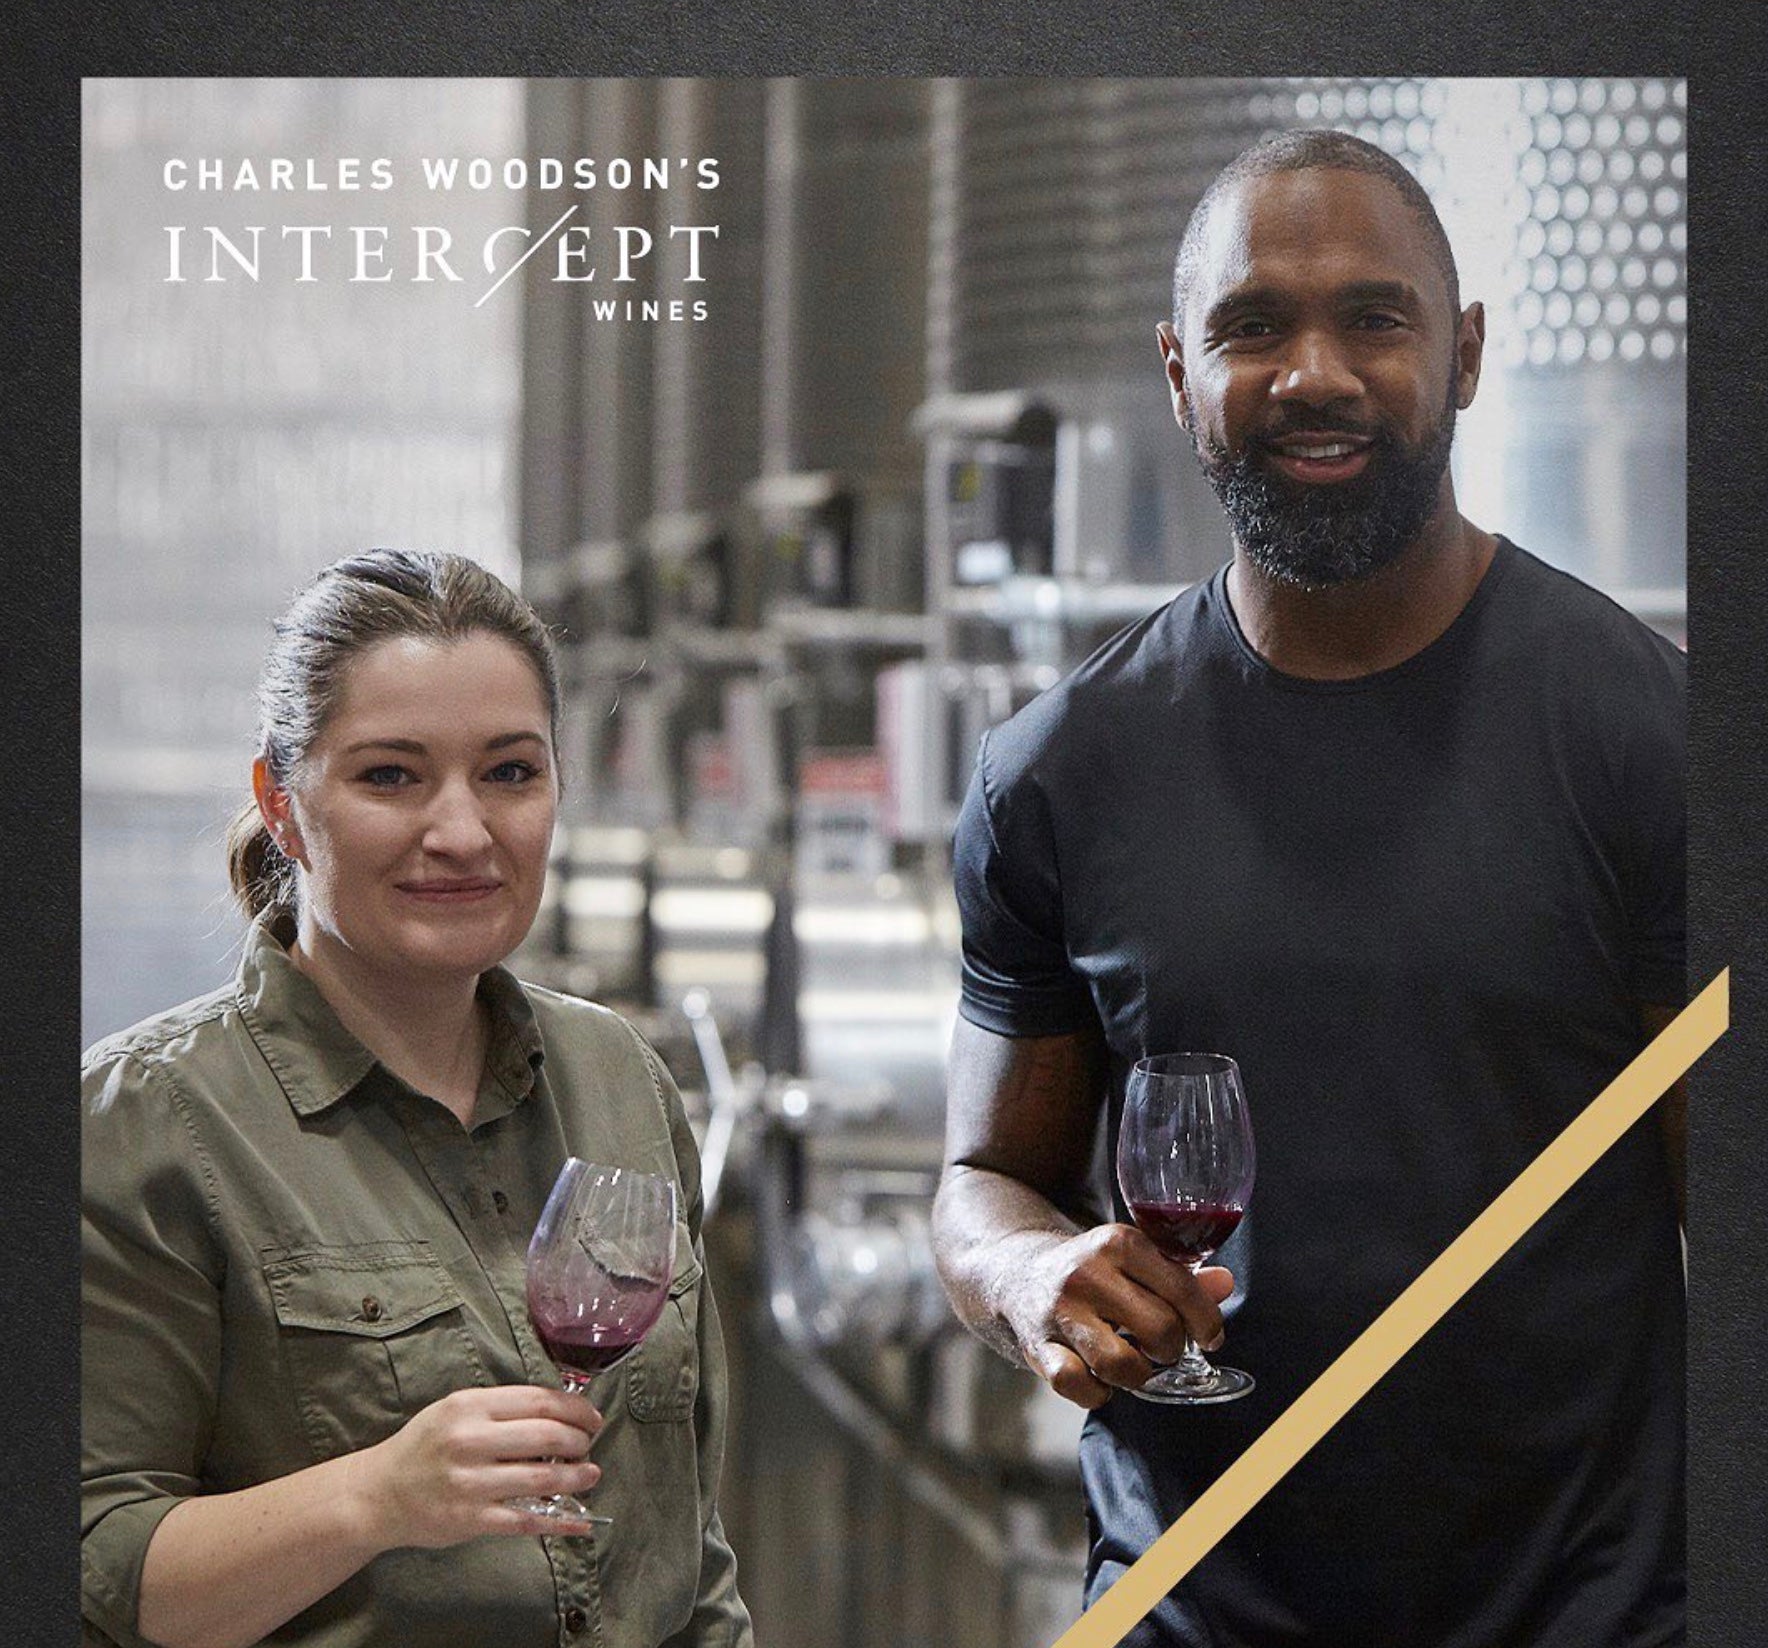 Charles Woodson’s Intercept Pinot Noir